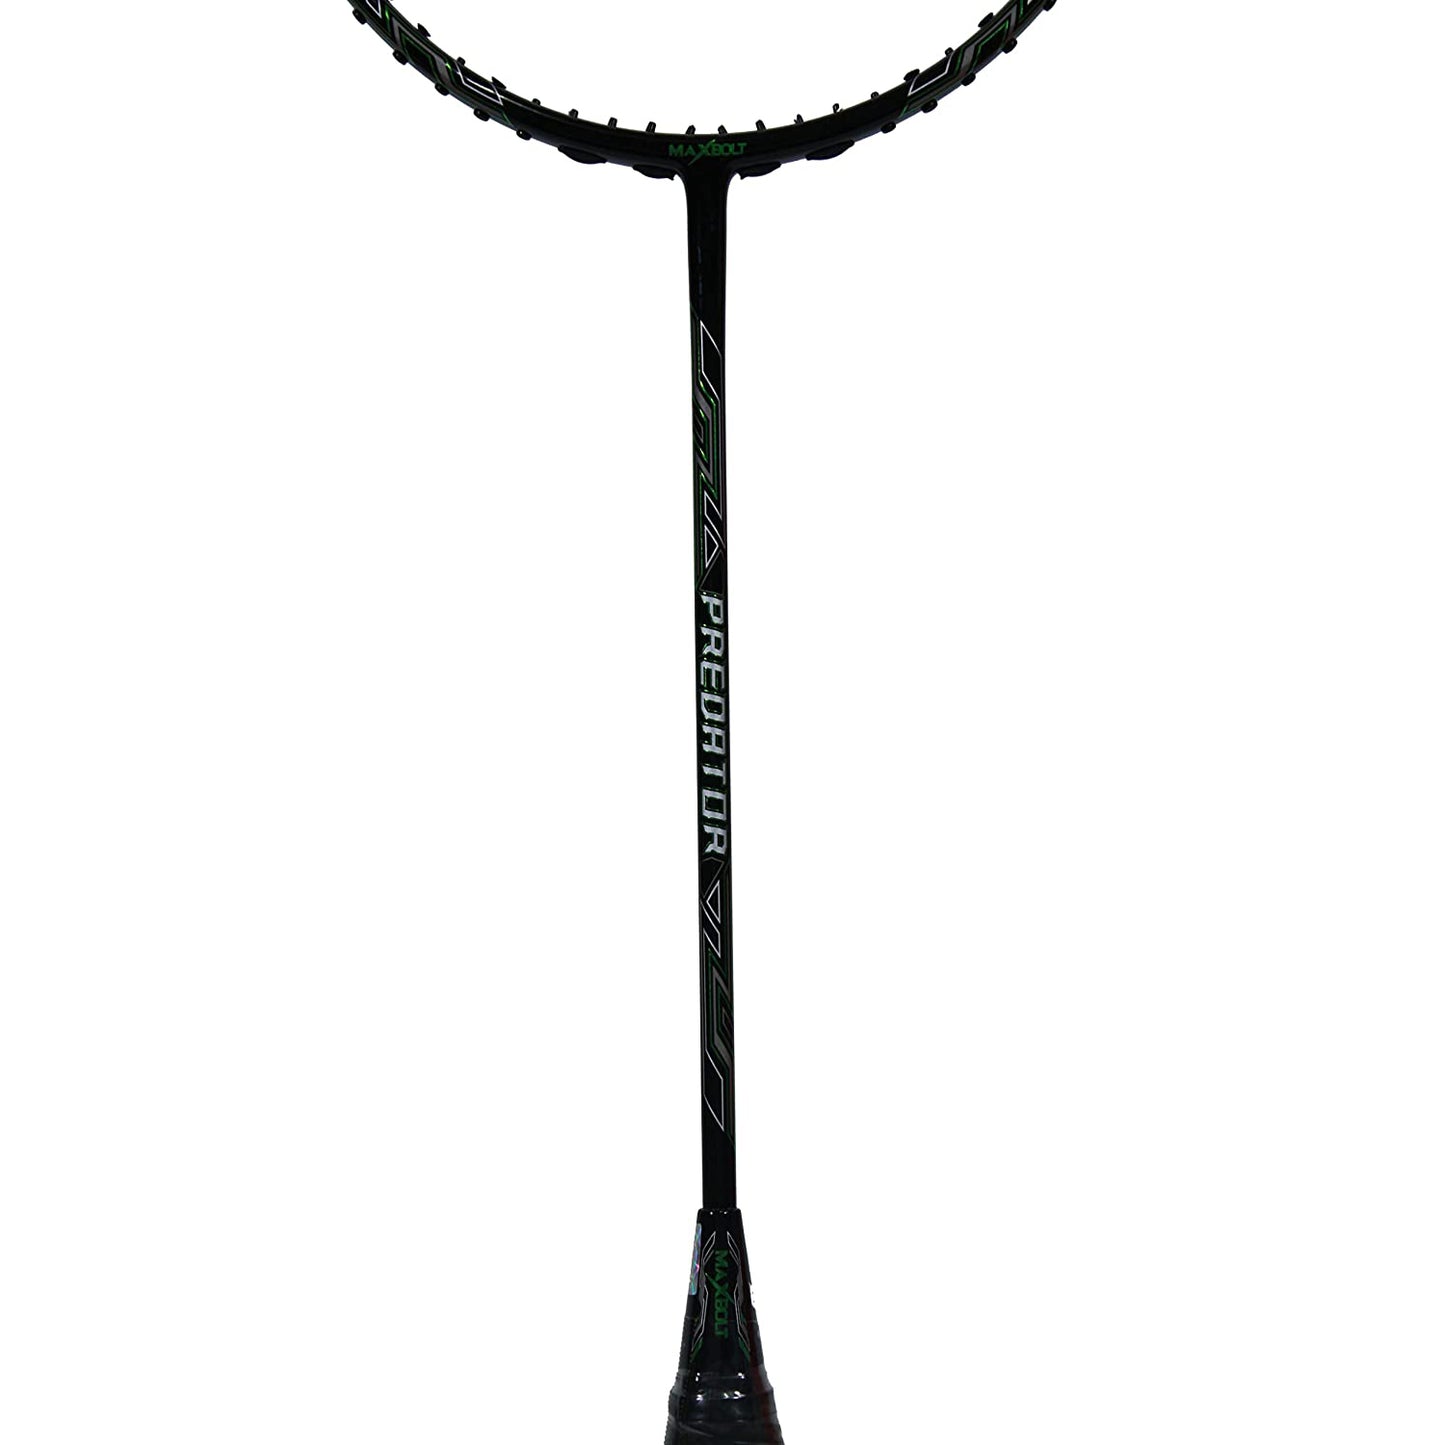 Maxbolt Predator Unstrung Badminton Racquet - Best Price online Prokicksports.com